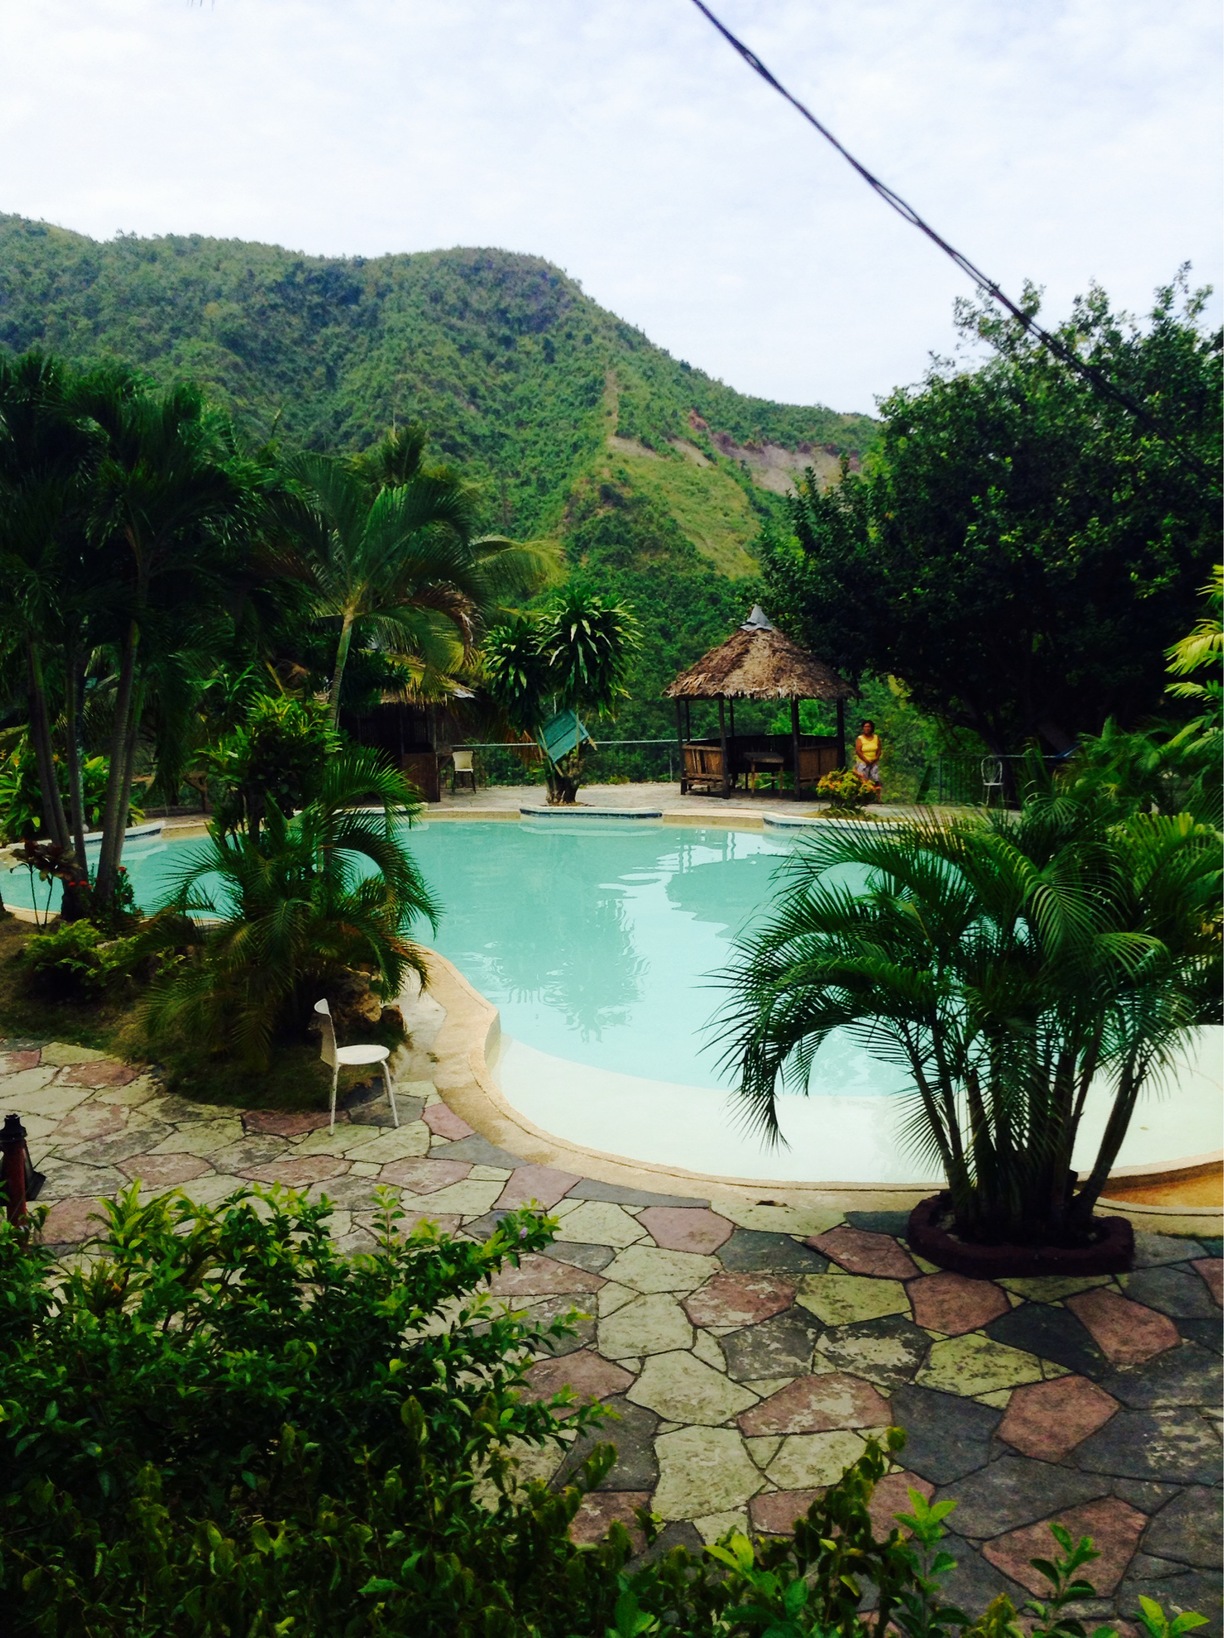 Cebu Hidden Paradise Mountain Resort, Lapu-Lapu City, Philippines -...